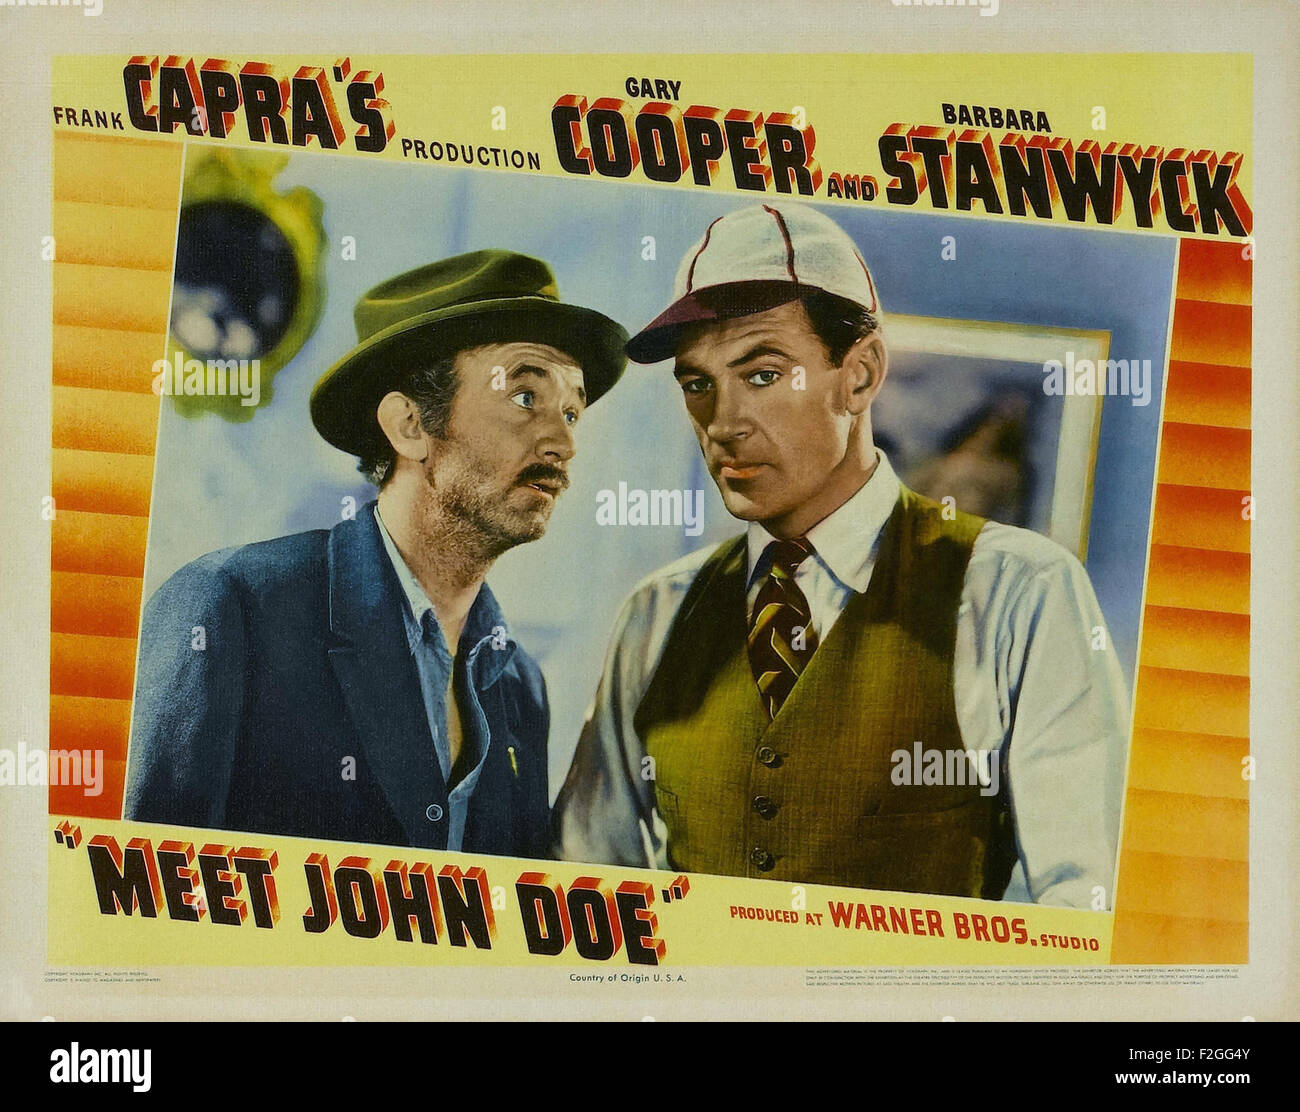 Meet John Doe 06 - Movie Poster Stock Photo